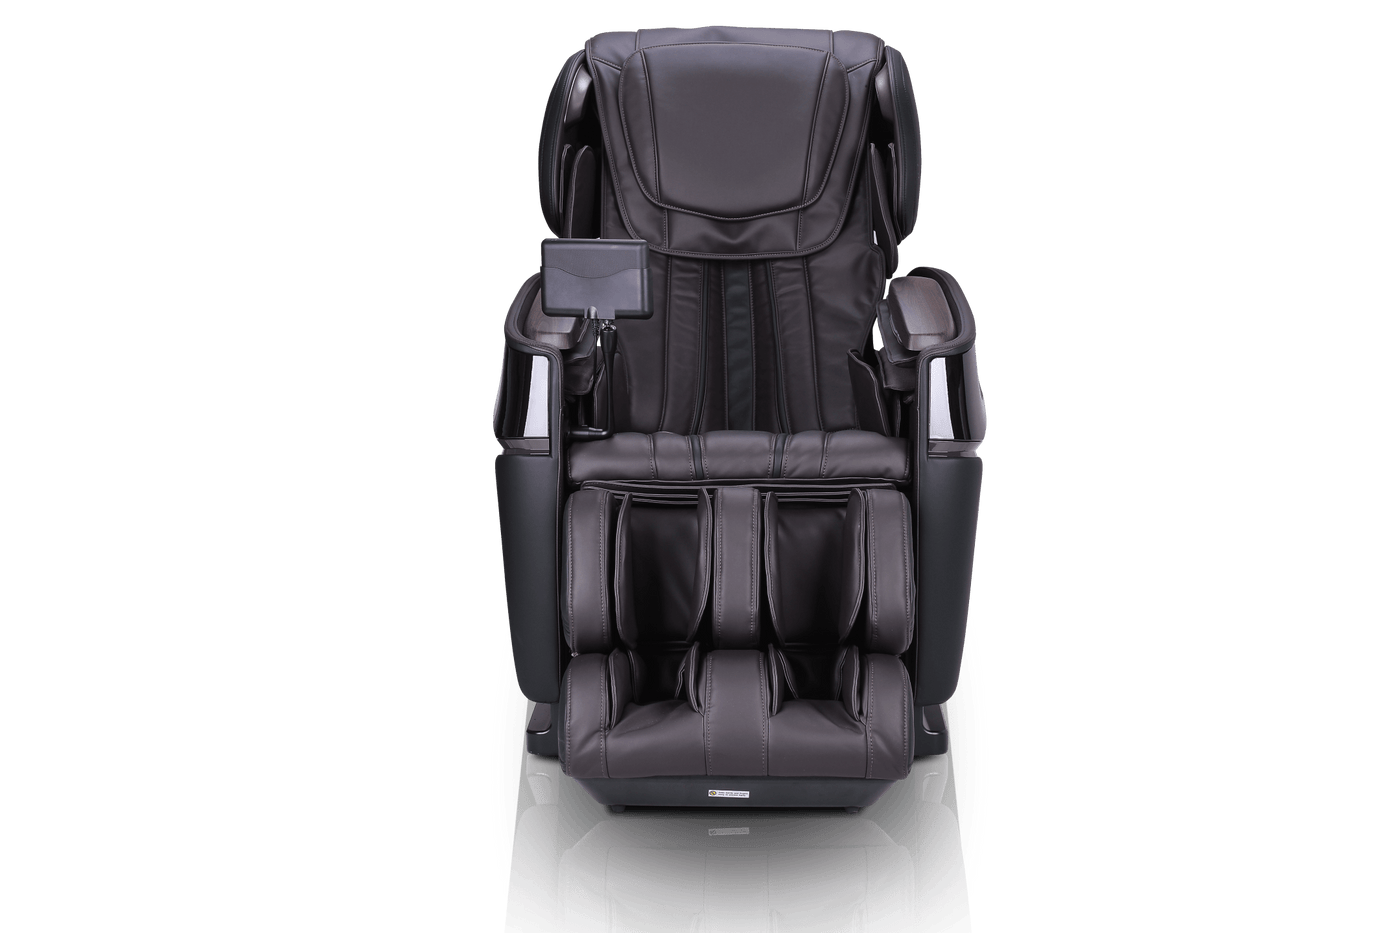 Zen 3D Pro Massage Chair